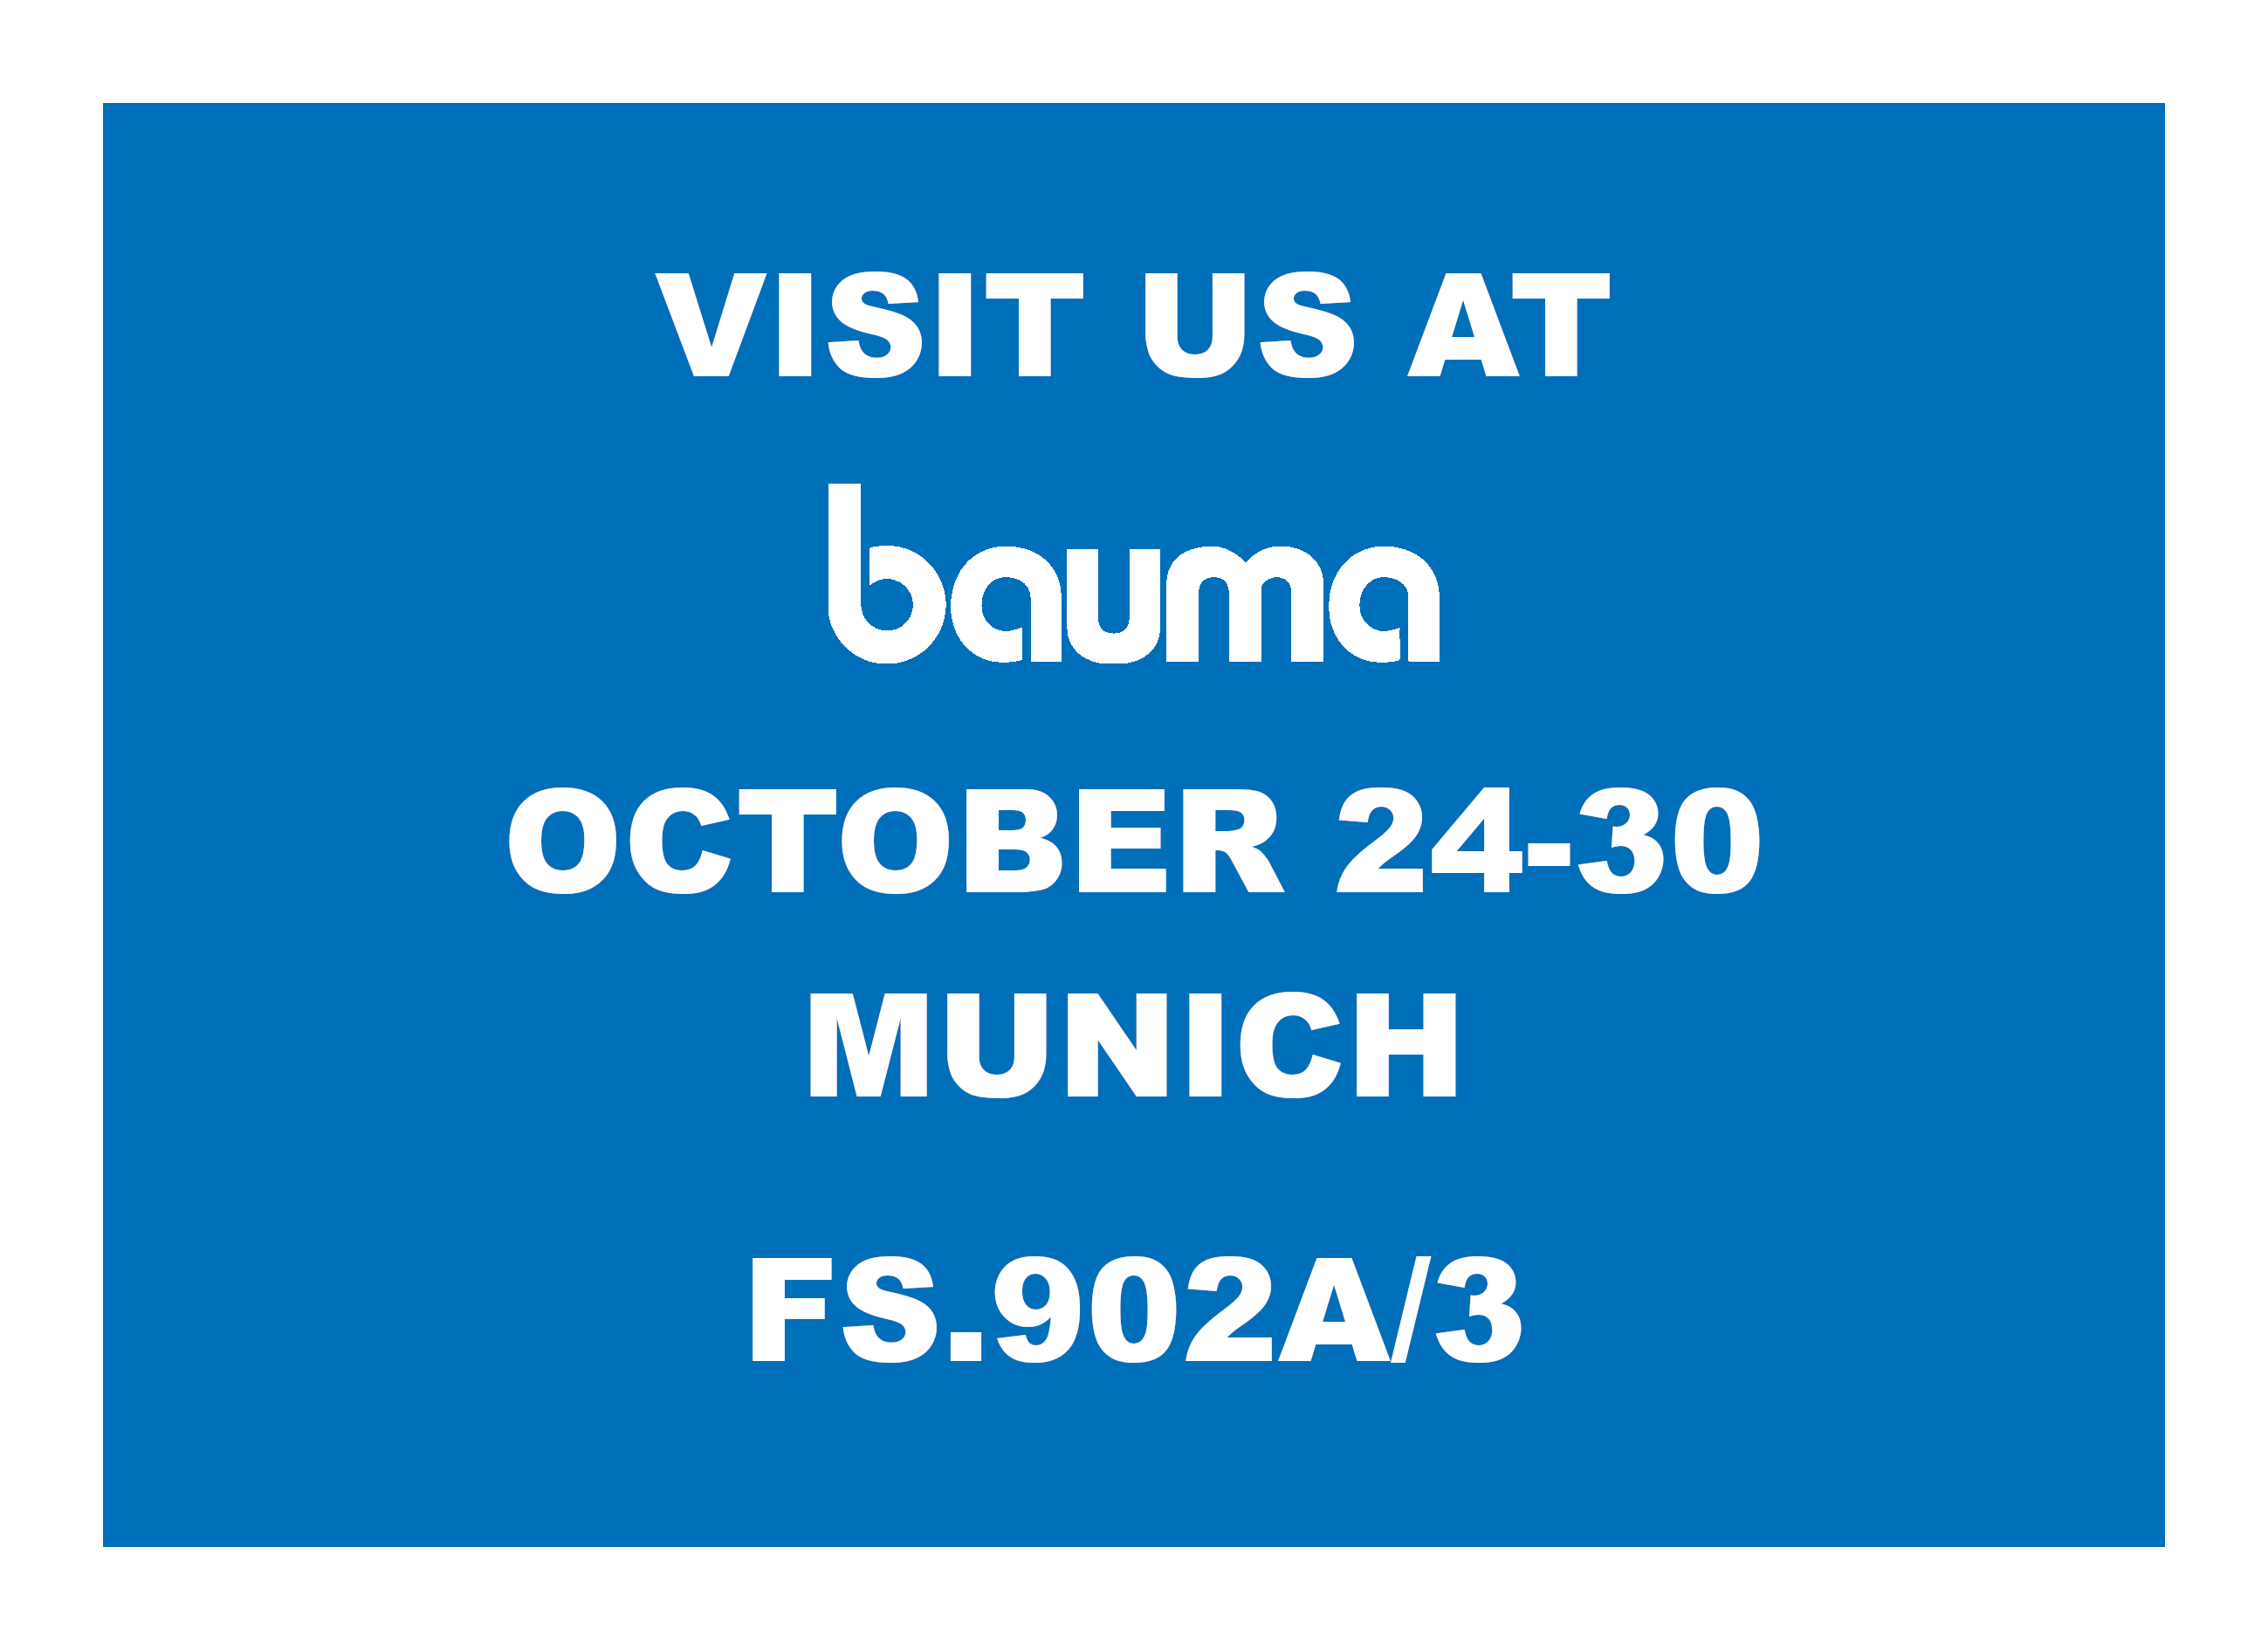 "Visit us at Bauma, October 24-30, Munich | FS.902A/3